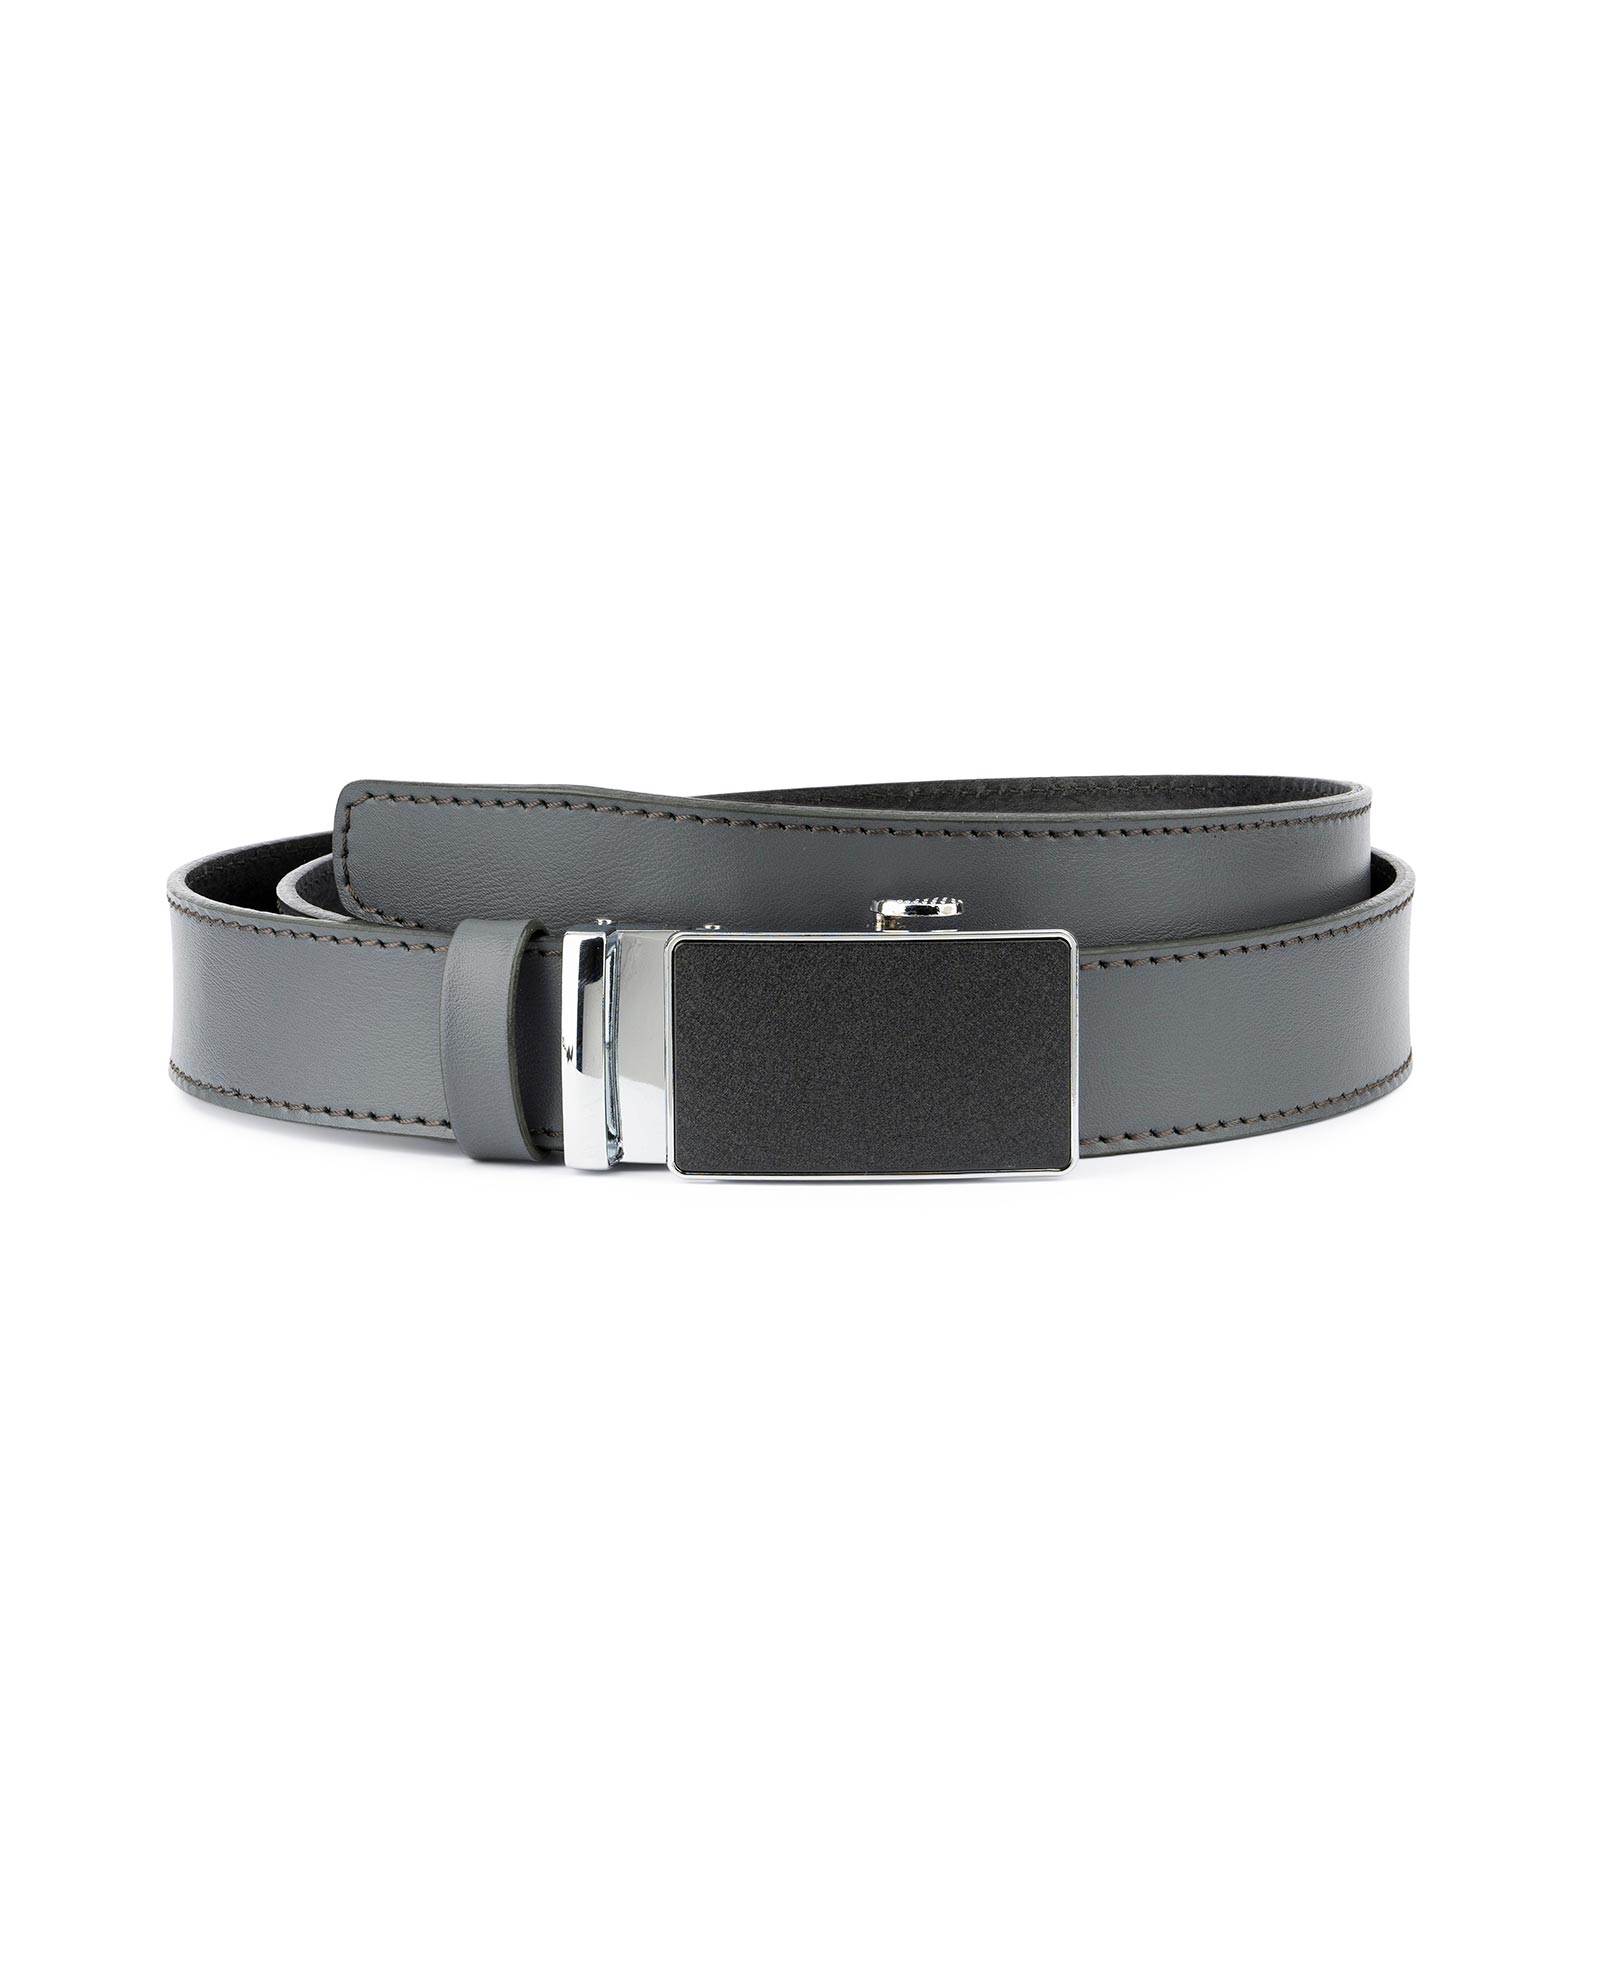 Buy Men's Grey Belt with Slide Buckle | LeatherBeltsOnline.com